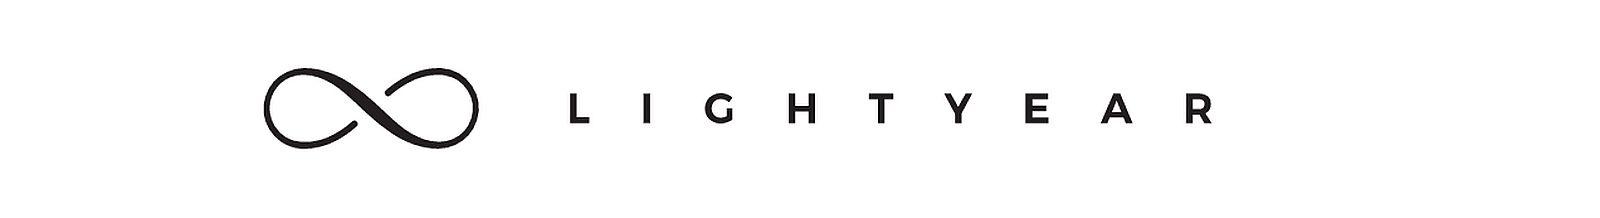 Lightyear Logo - lightyear